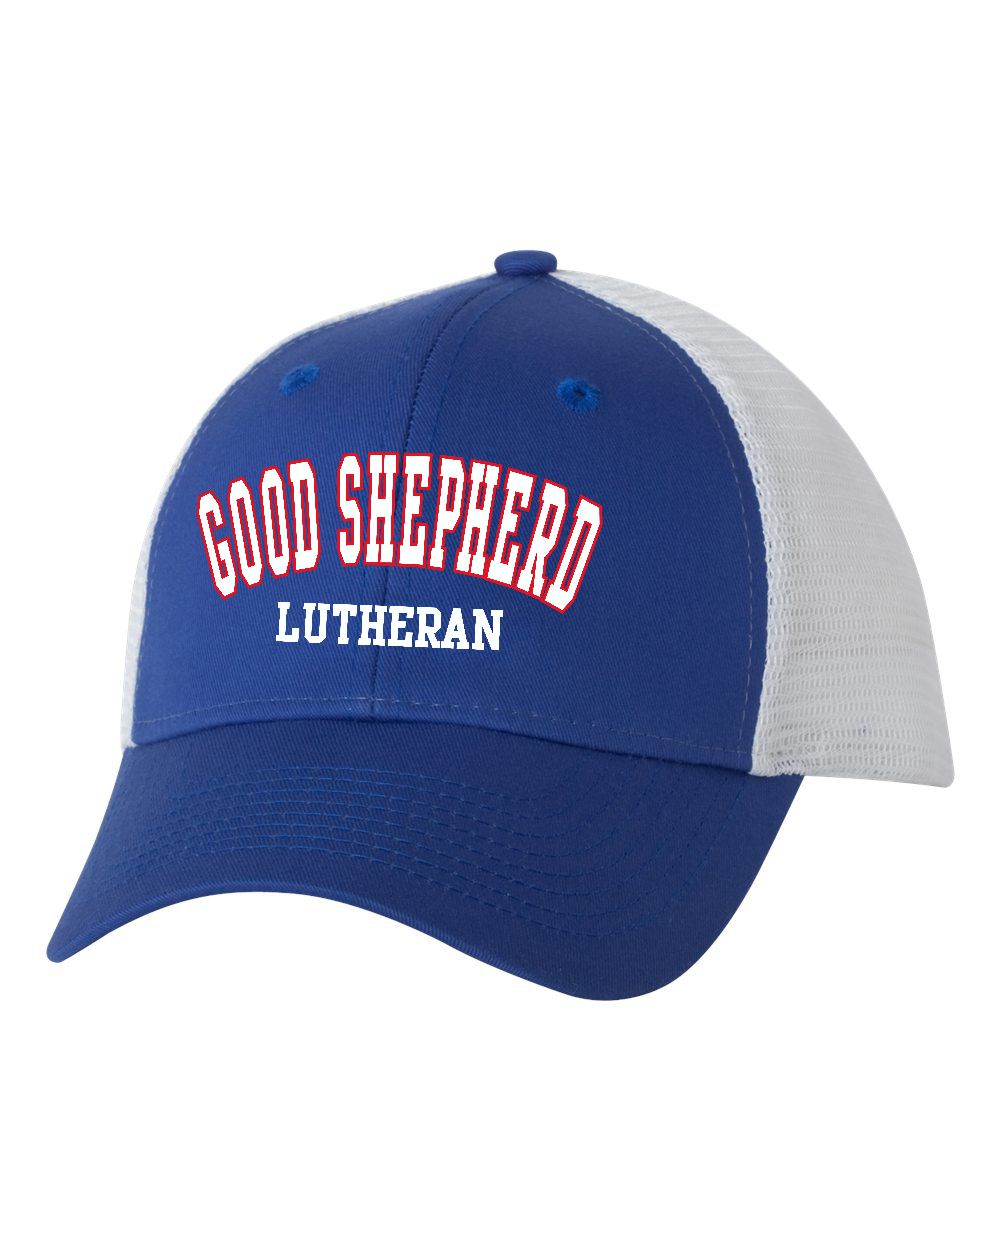 Good Shepherd Lutheran Snapback Trucker Cap